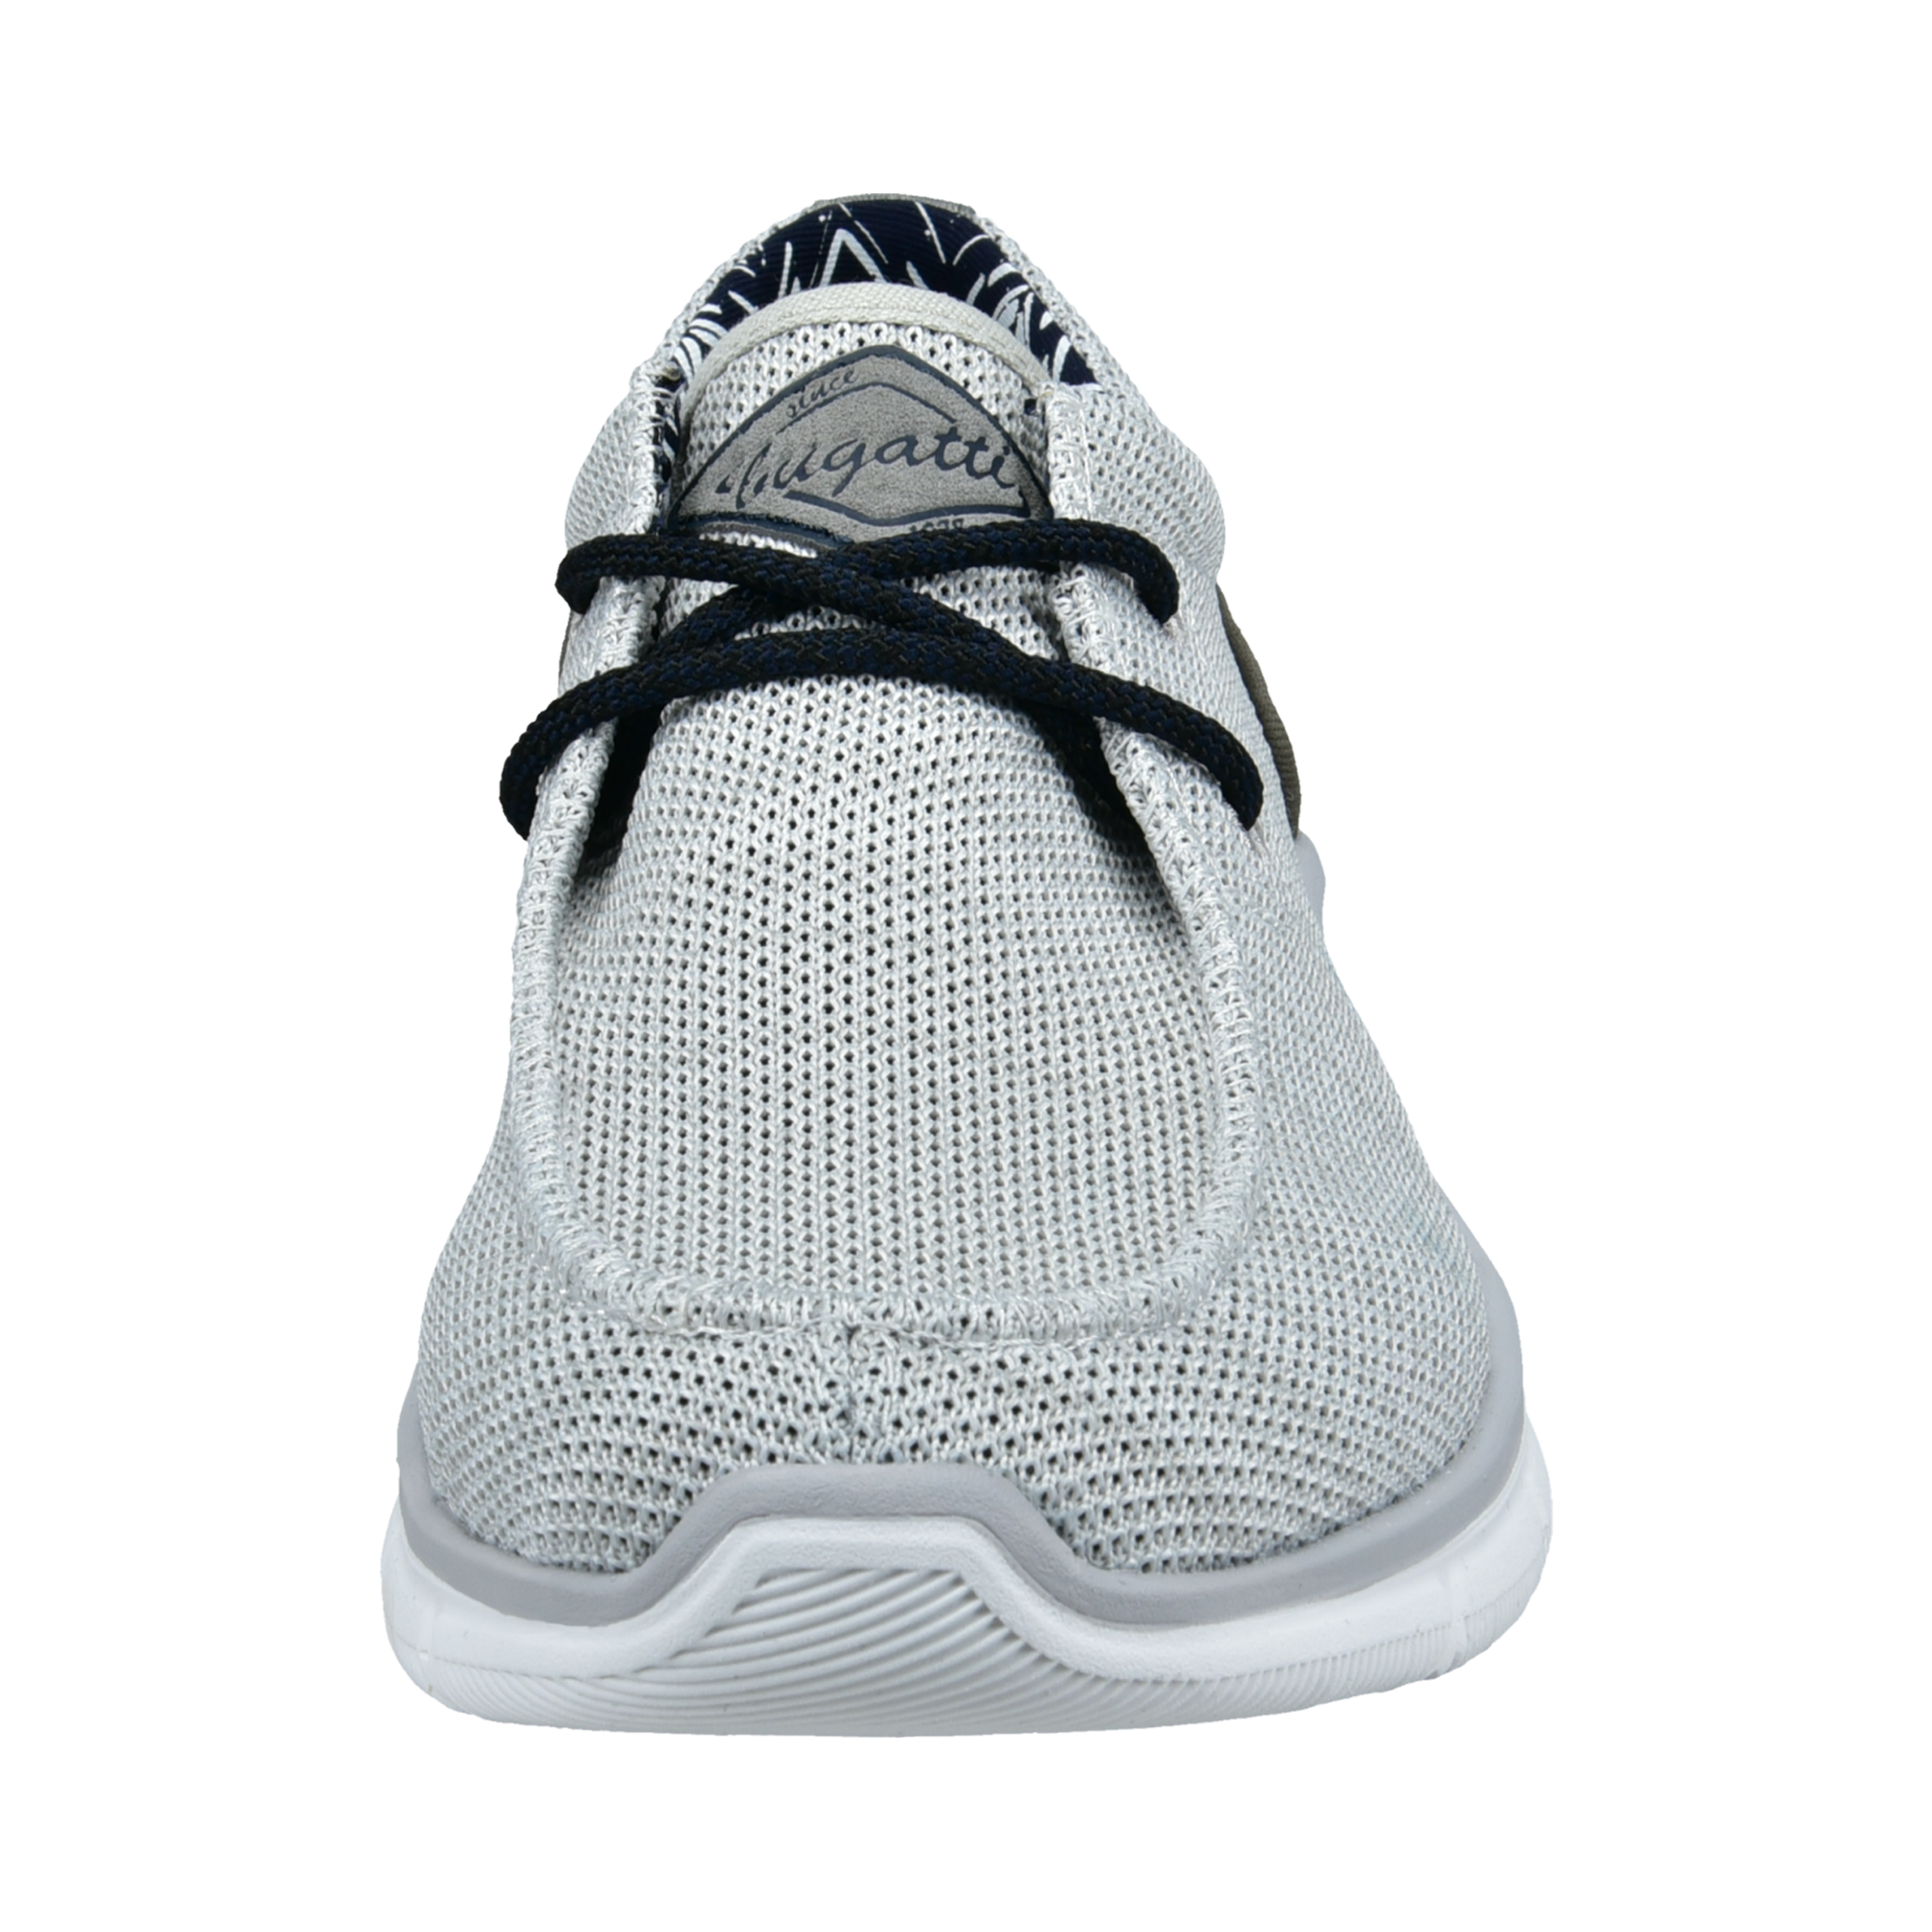 Sneaker grigio chiaro